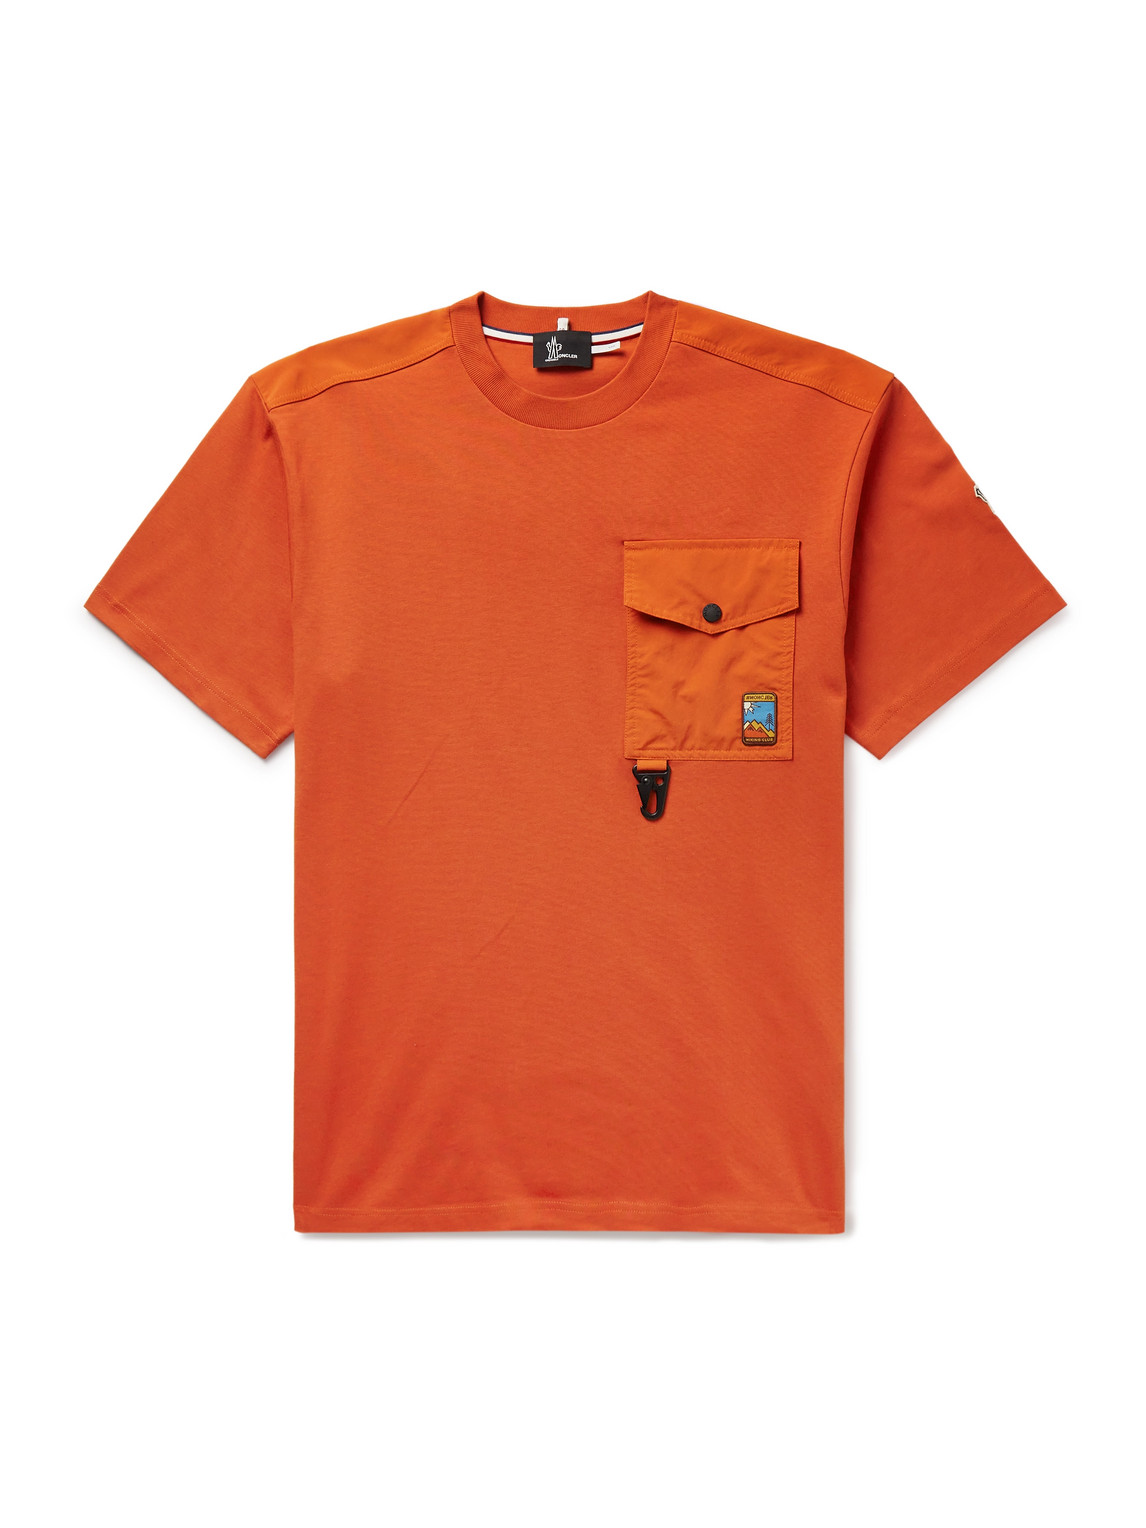 Moncler Grenoble - Logo-Appliquéd Shell-Trimmed Combed Cotton-Jersey T-Shirt - Men - Orange - L von Moncler Grenoble